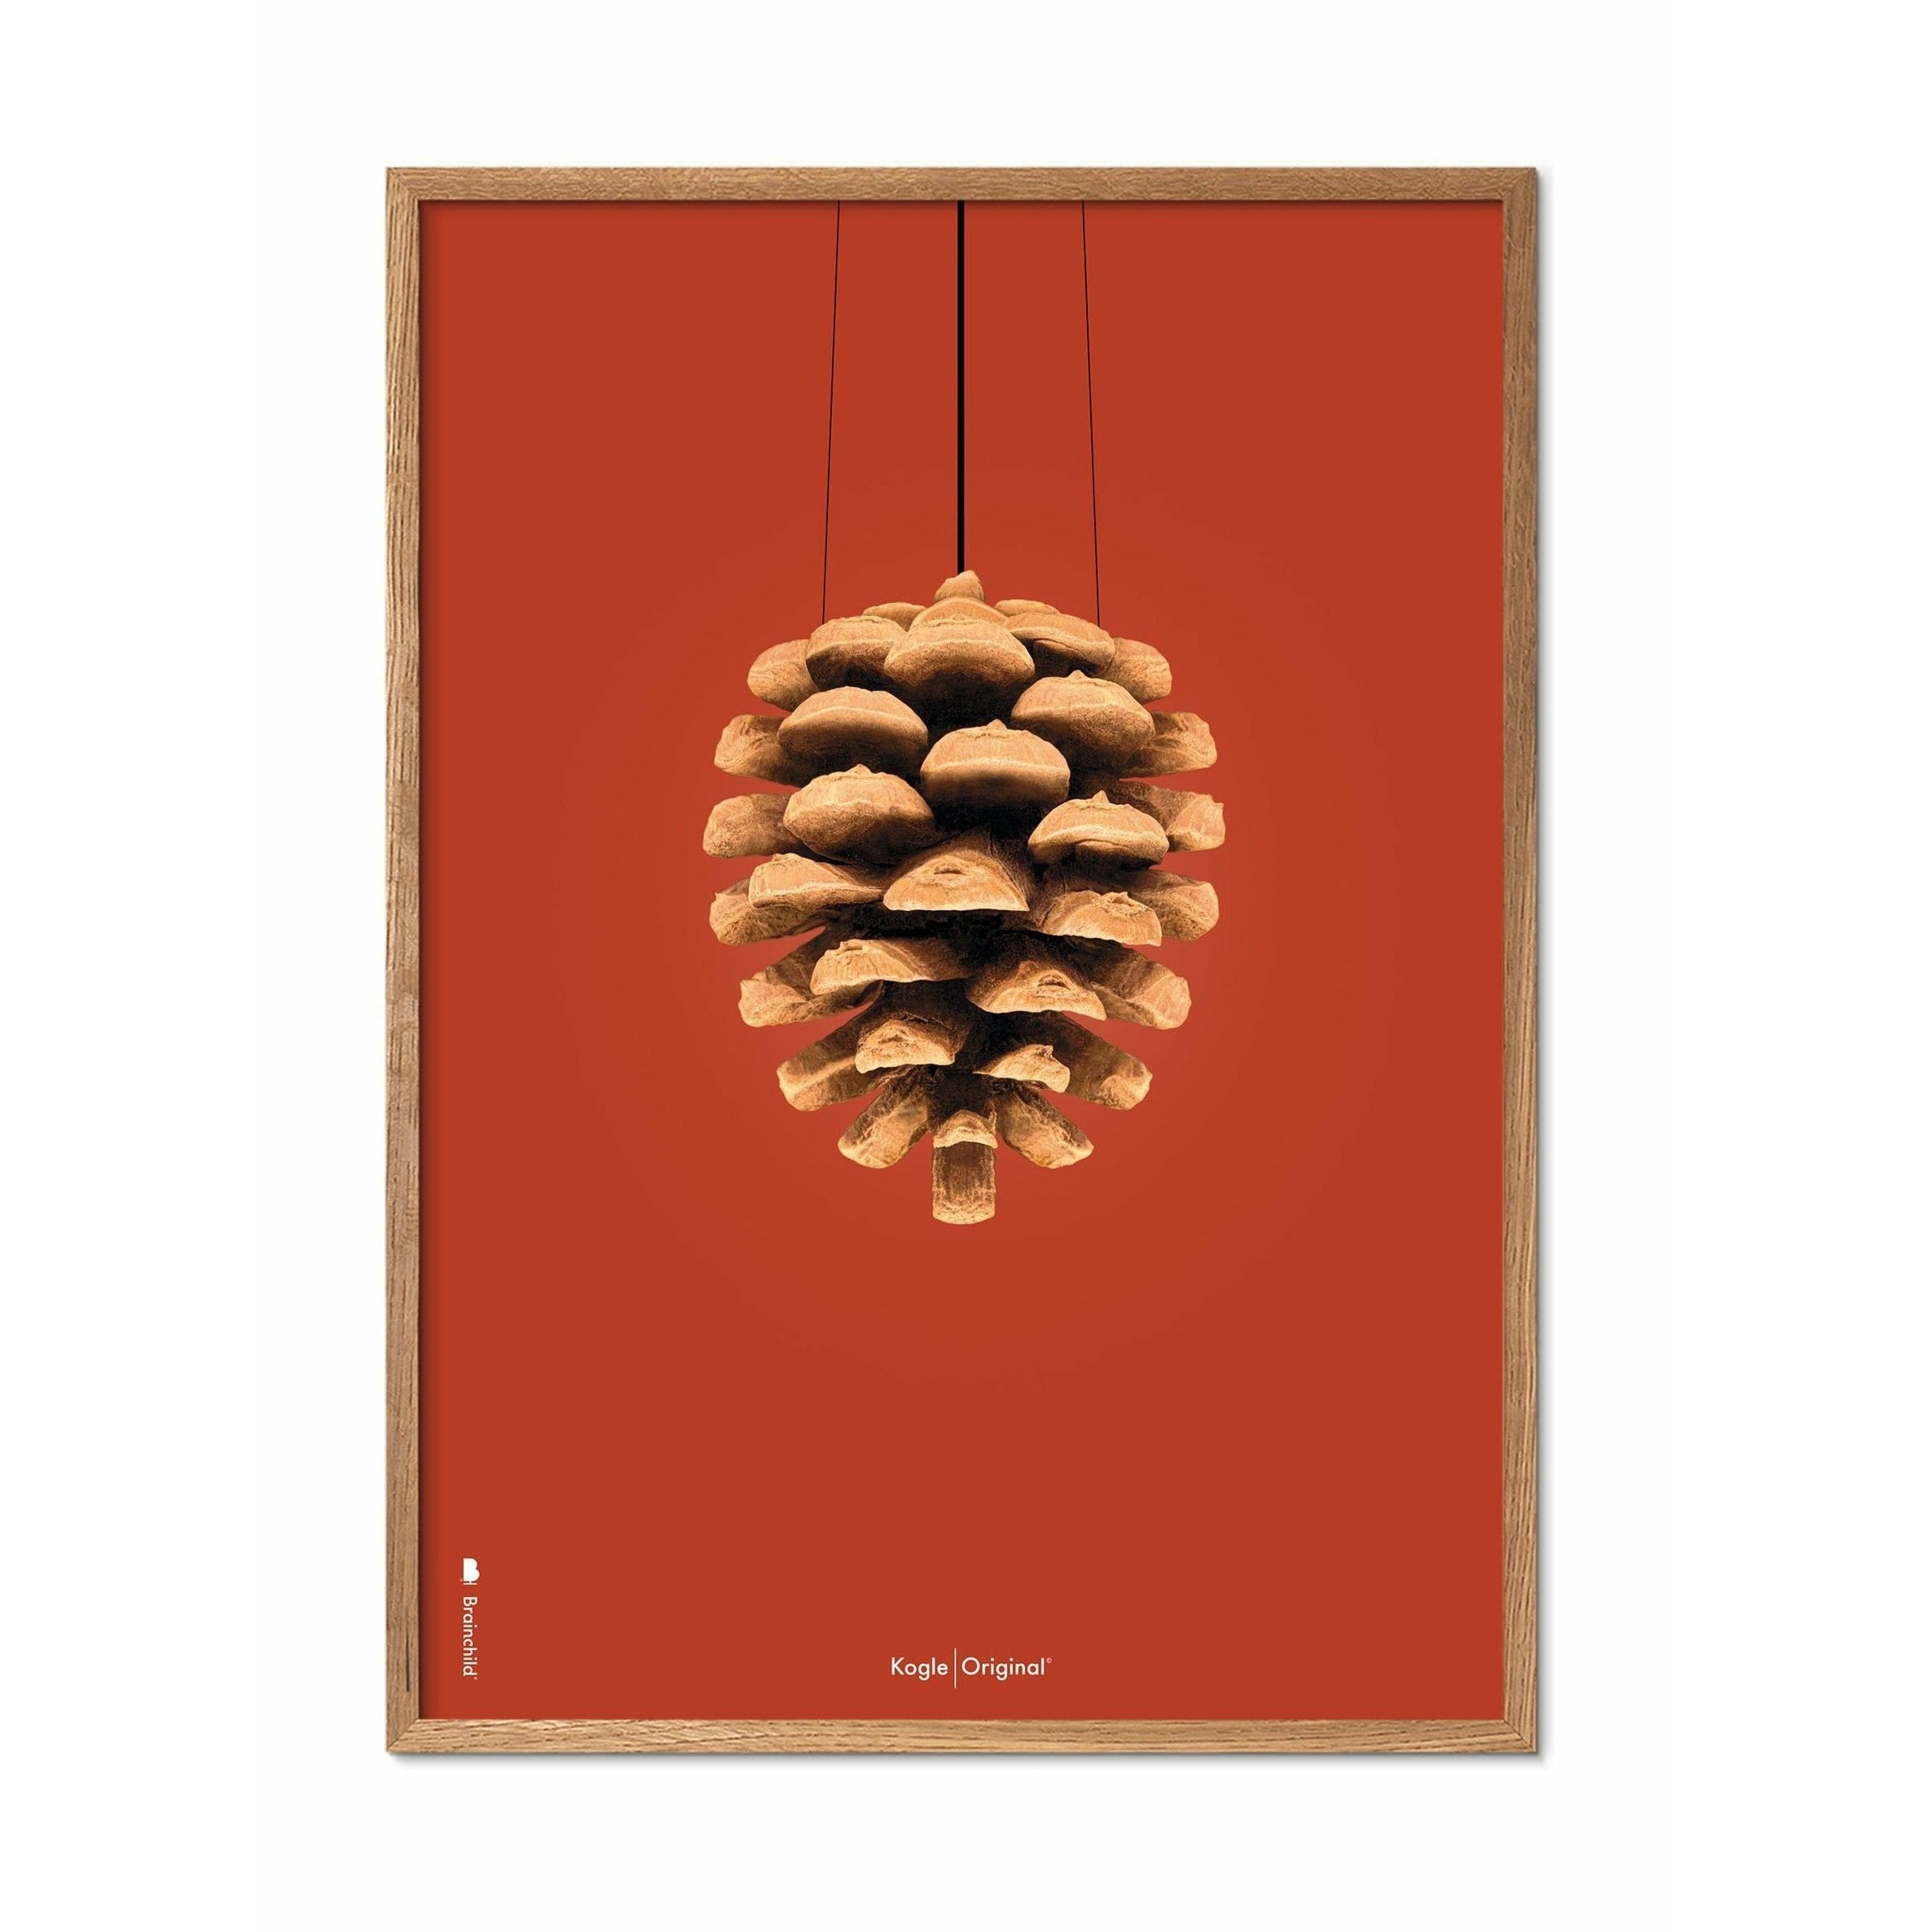 Brainchild Kogle Klassisk Plakat, Ramme I Lyst Træ 70X100 Cm, Rød Baggrund